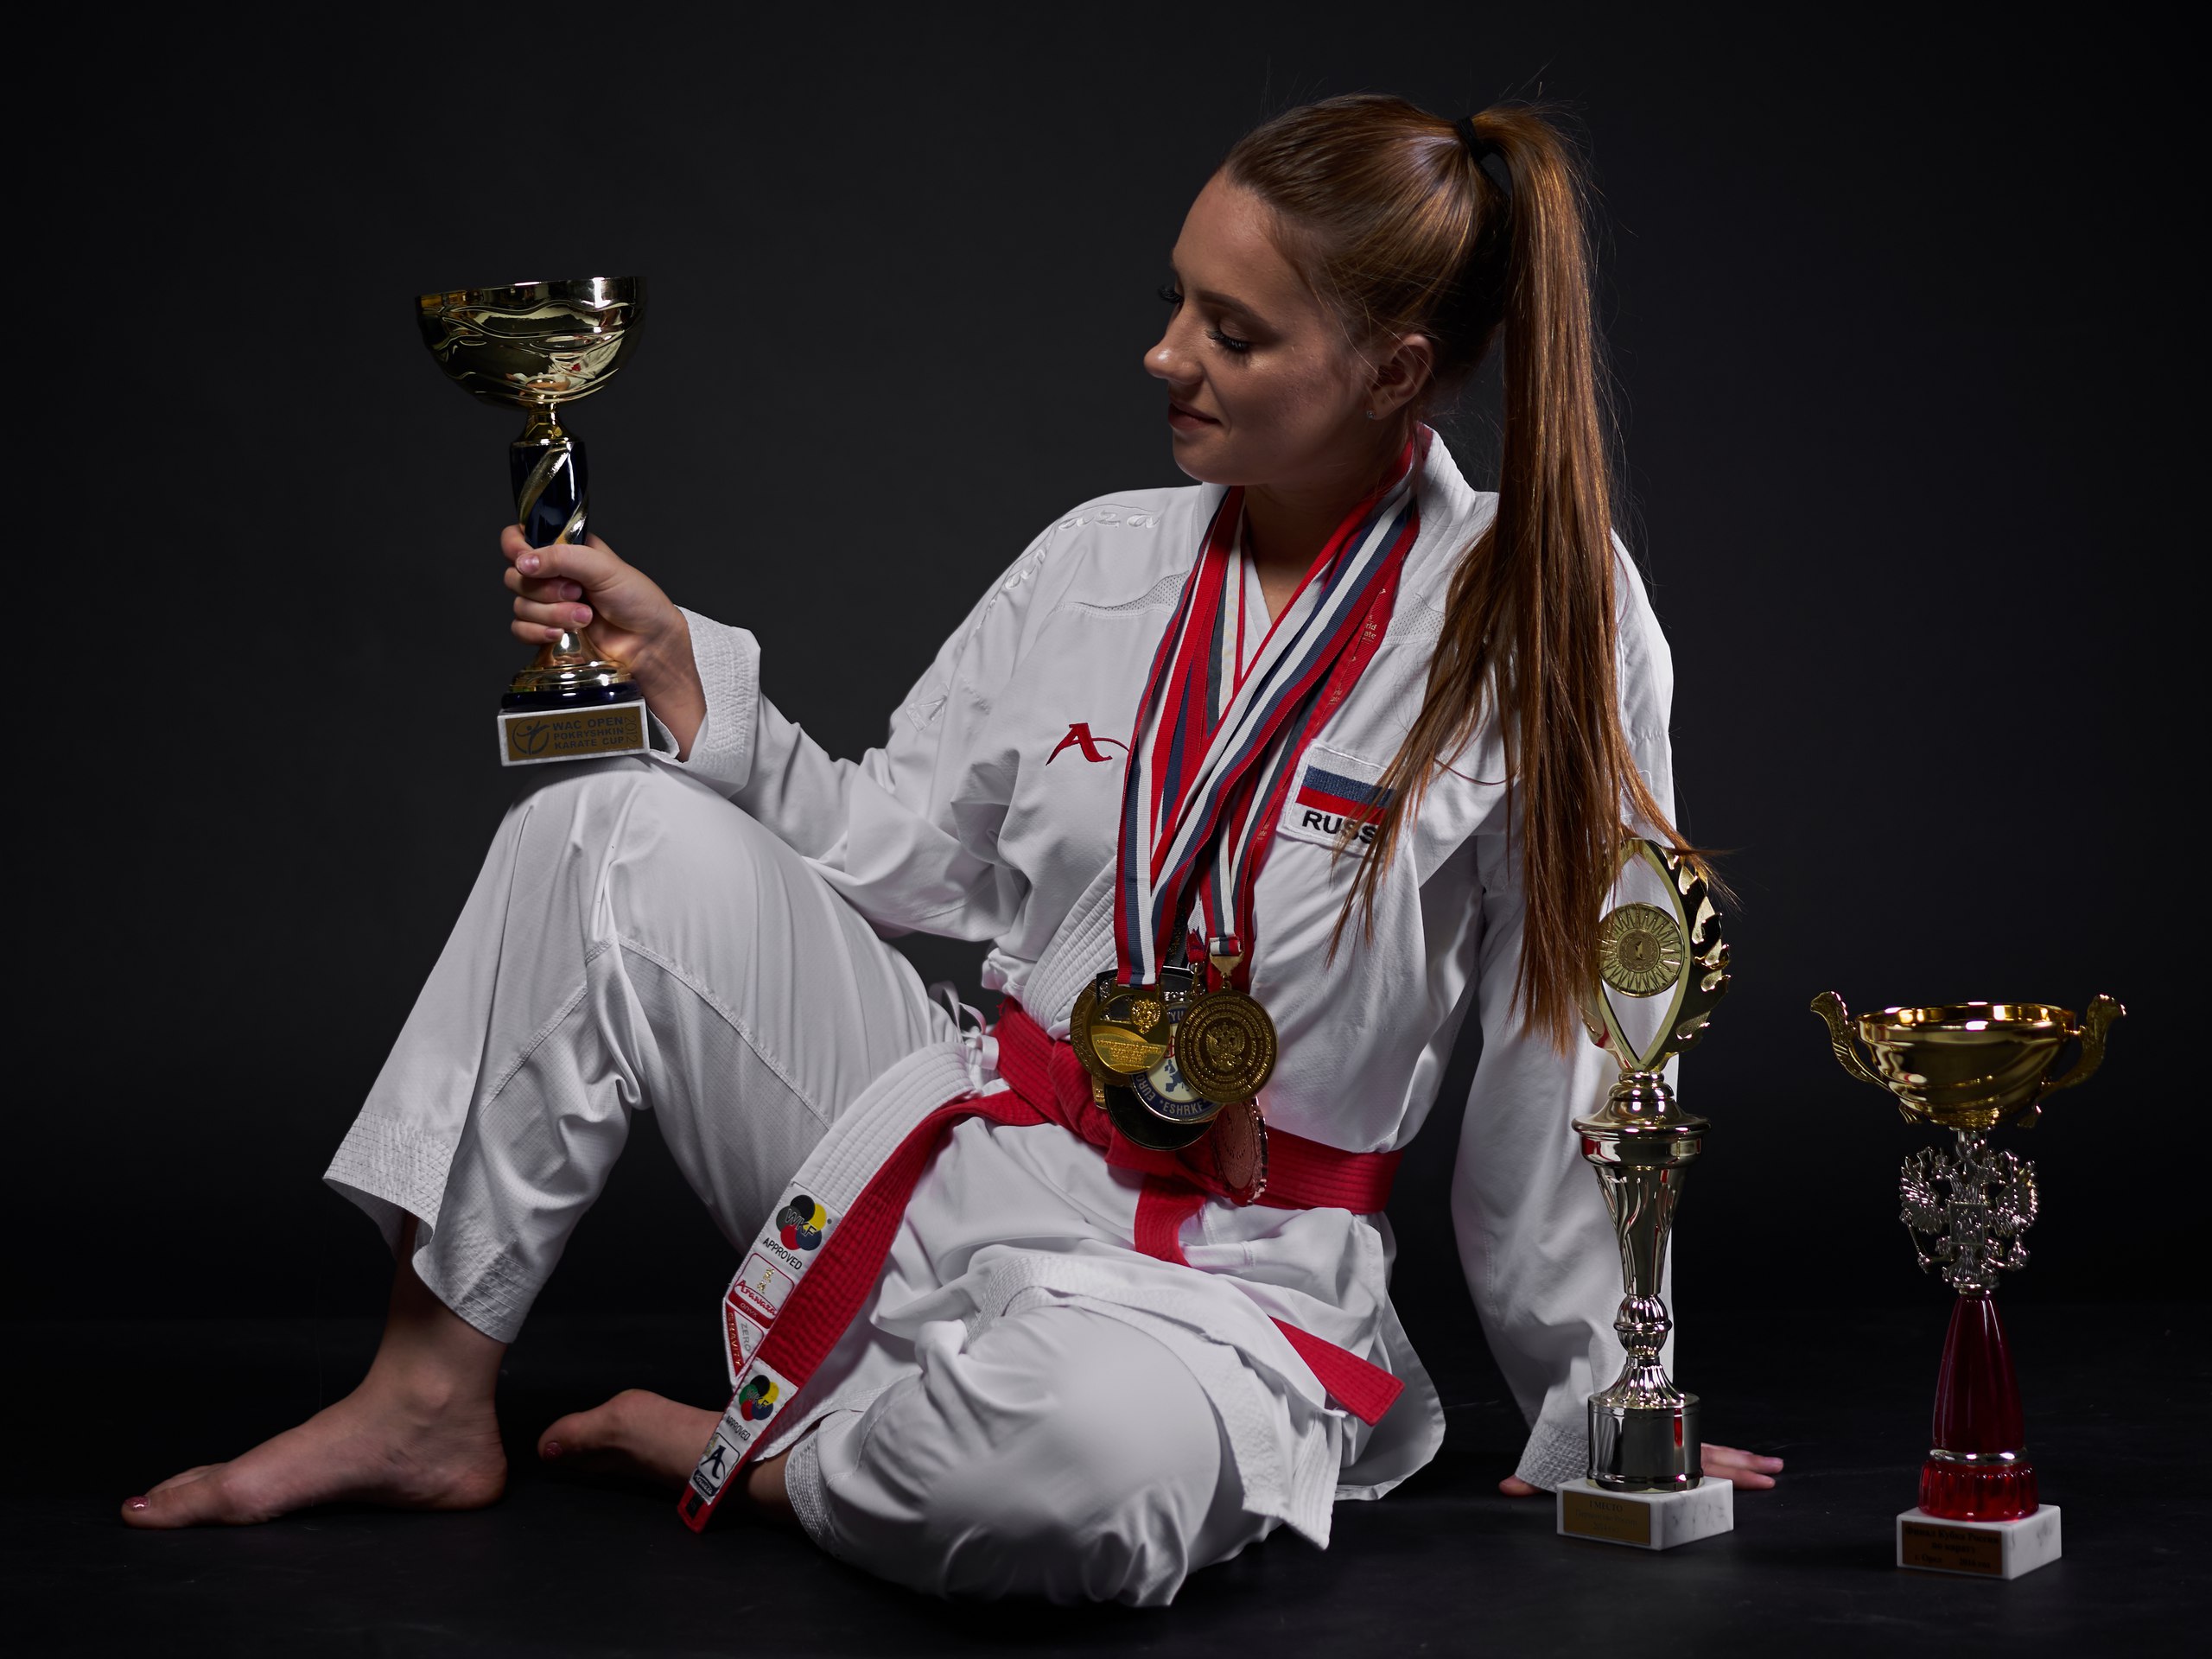 Студентка педуниверситета завоевала серебро на Чемпионате России по каратэ